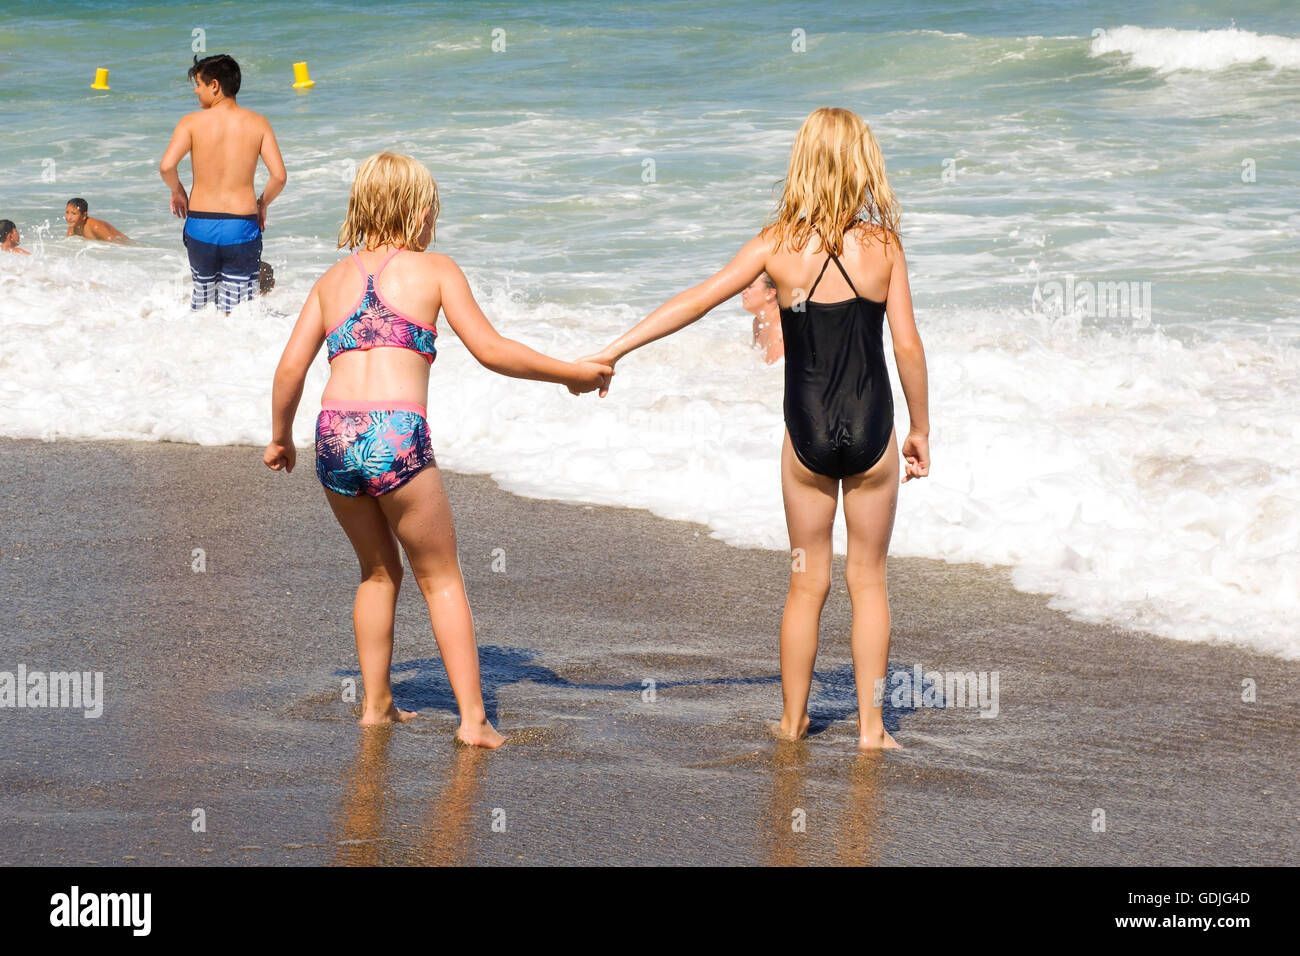 Bikini Beach Girls Spanish Stock Photos & Bikini Beach Girls ...